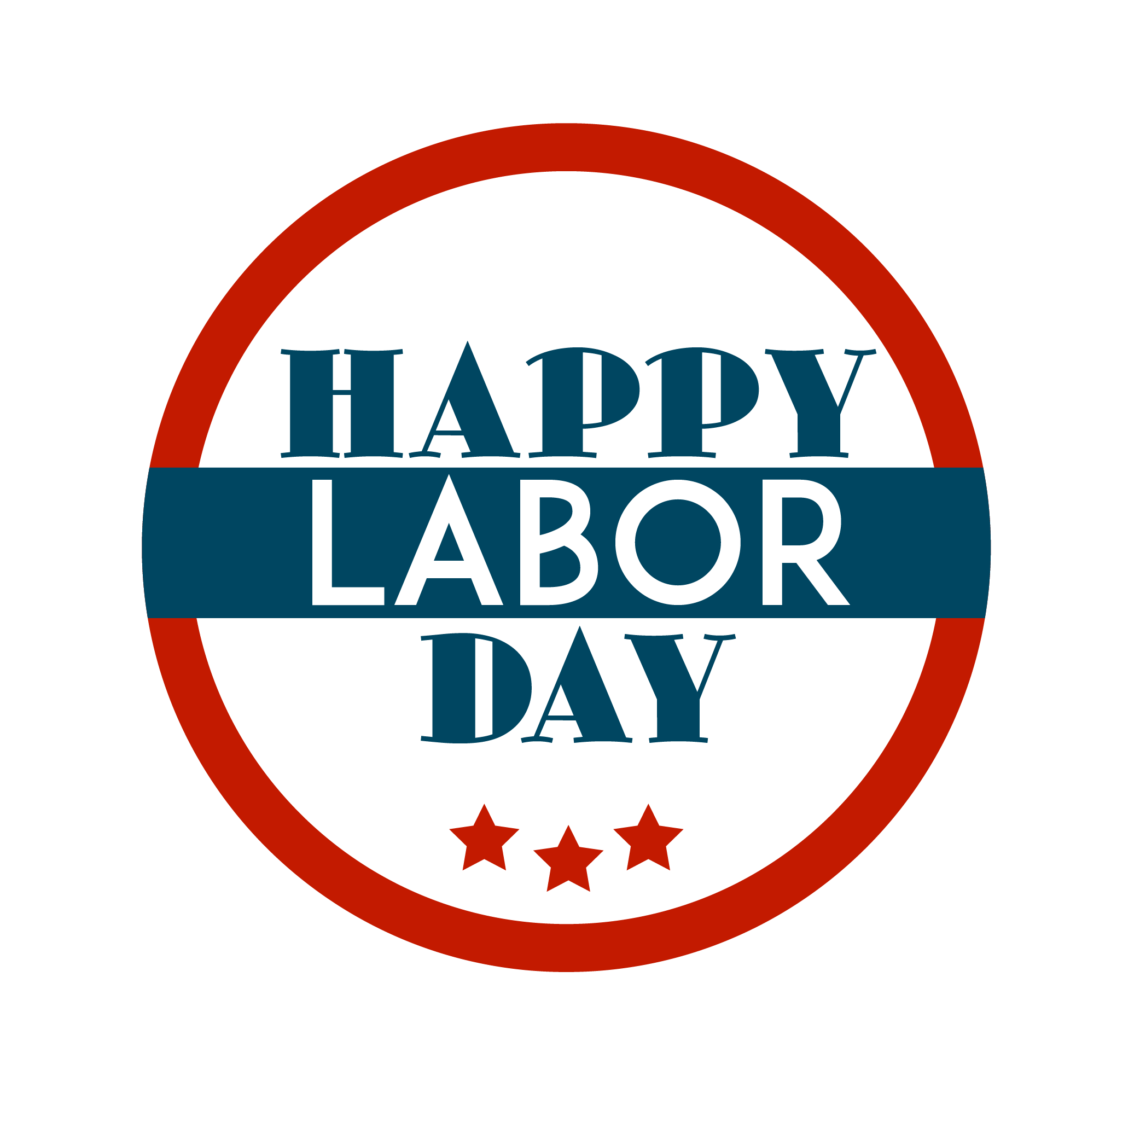 Happy Labor Day image